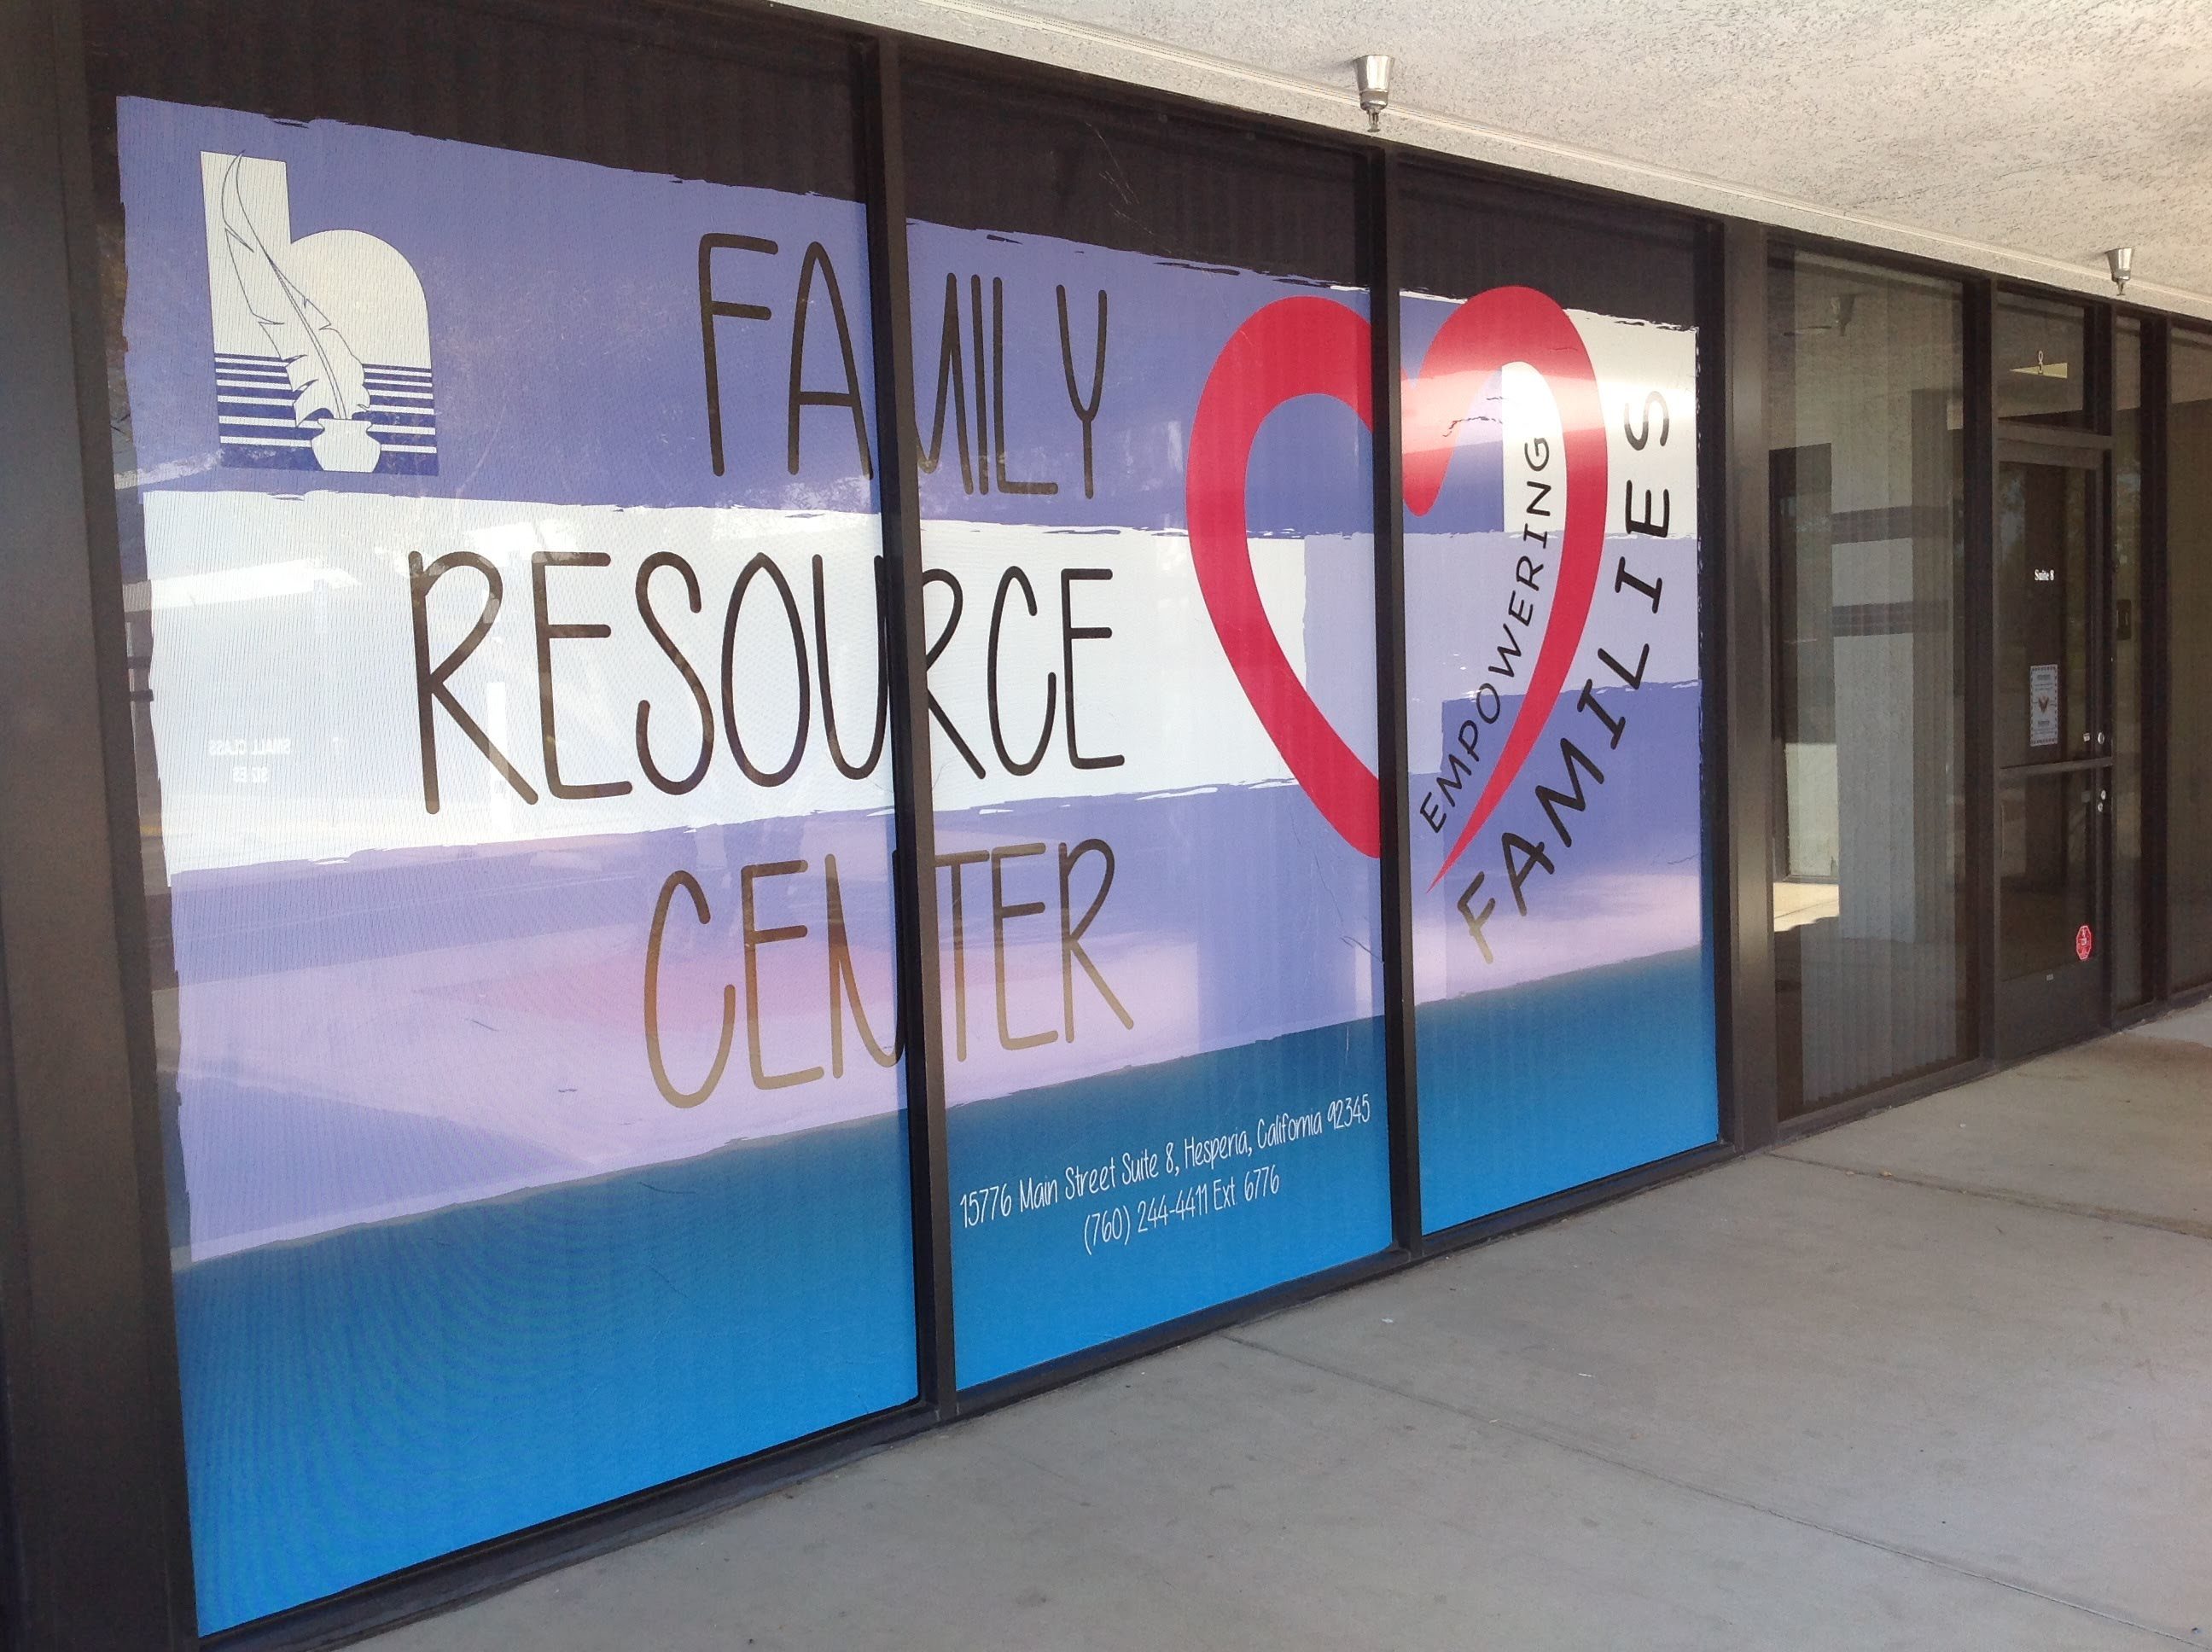 HUSD Family Resource Center